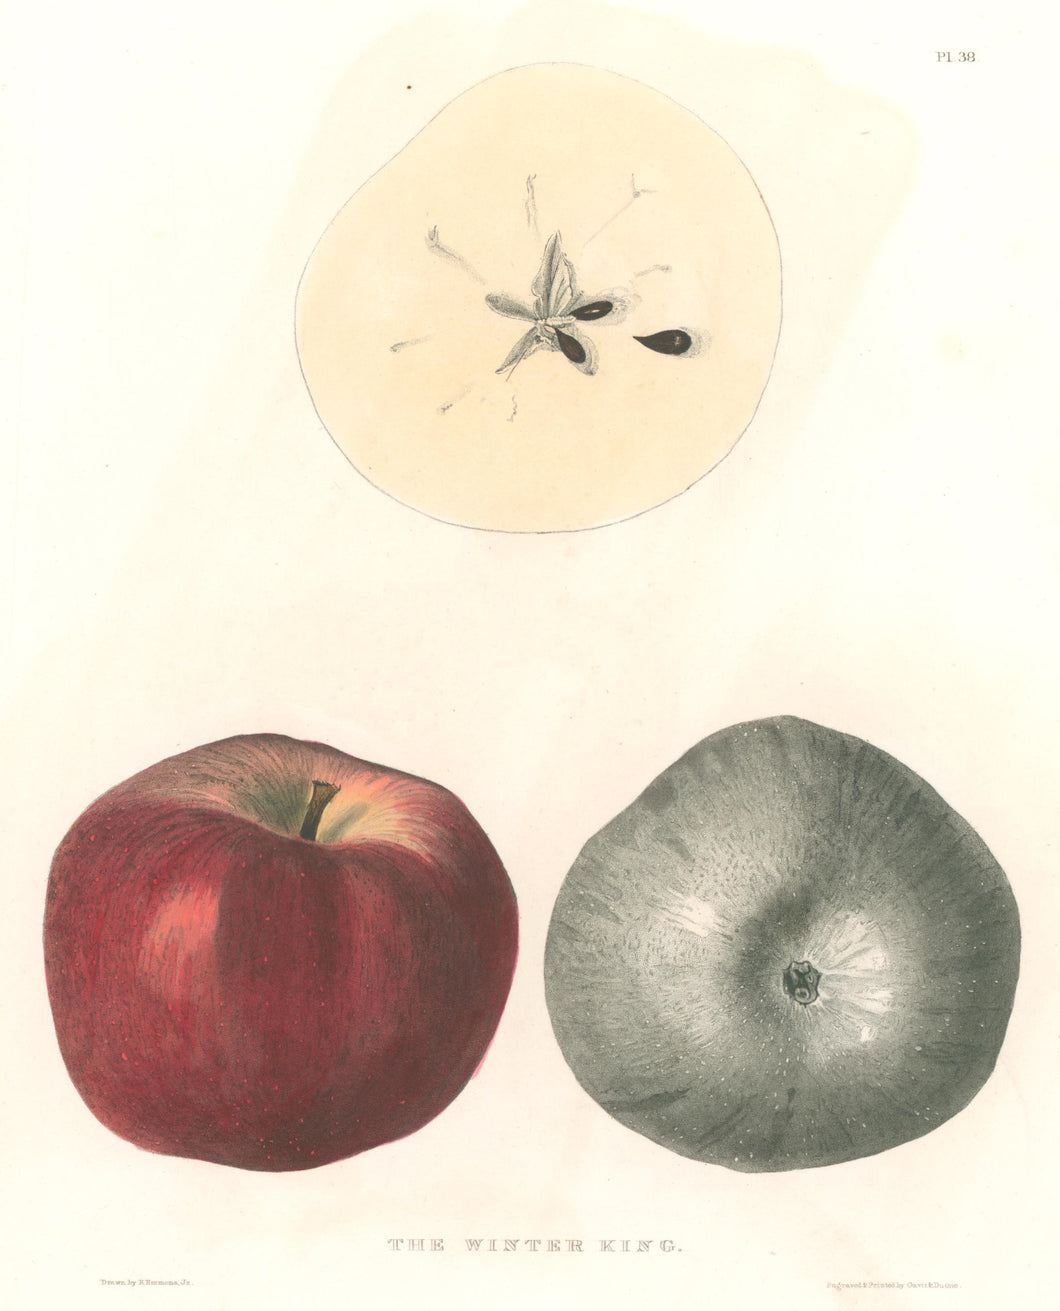 Emmons, Ebenezer “The Winter King”  [apple]  Plate 38